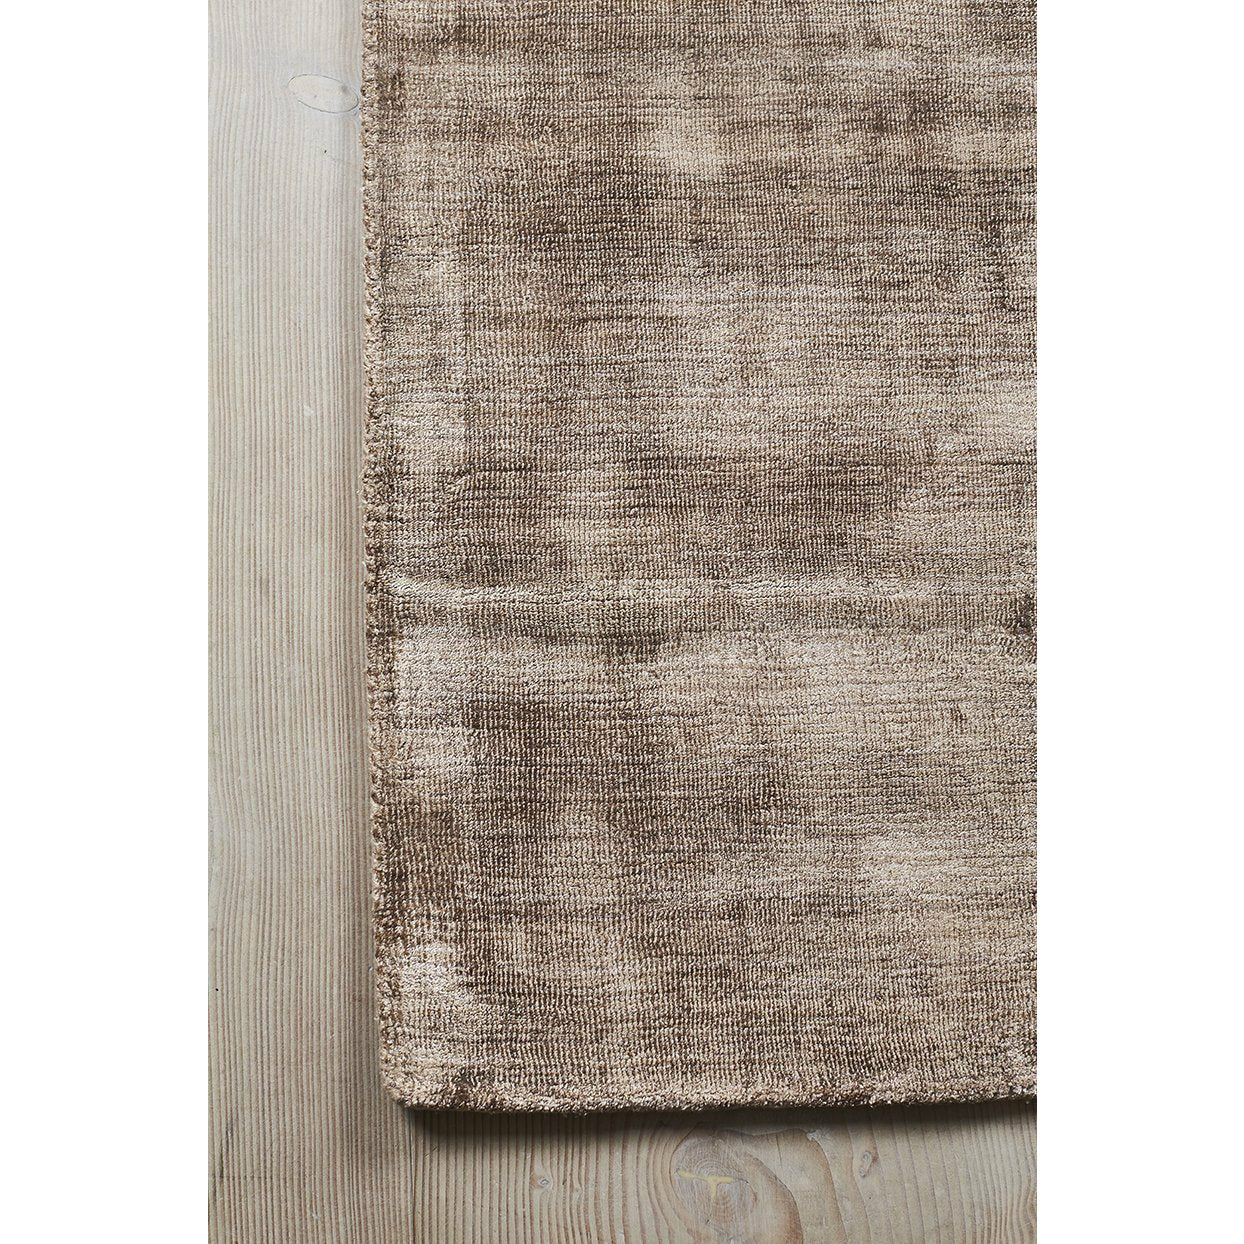 Massimo karma koberec Nougat Brown, 200x300 cm